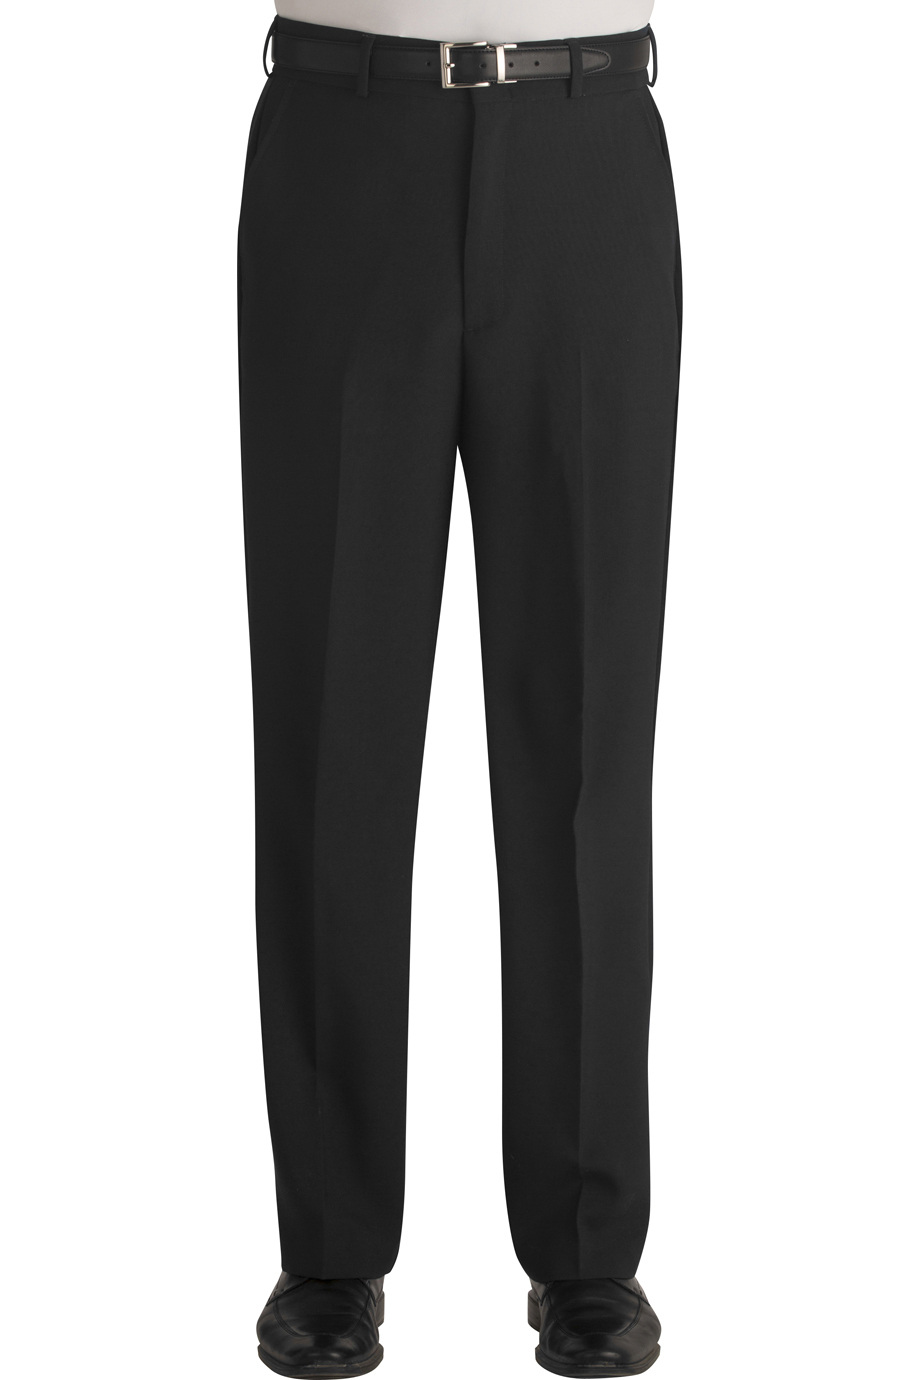 Men's Pleat Front Trousers-atpcosmetics.com.vn